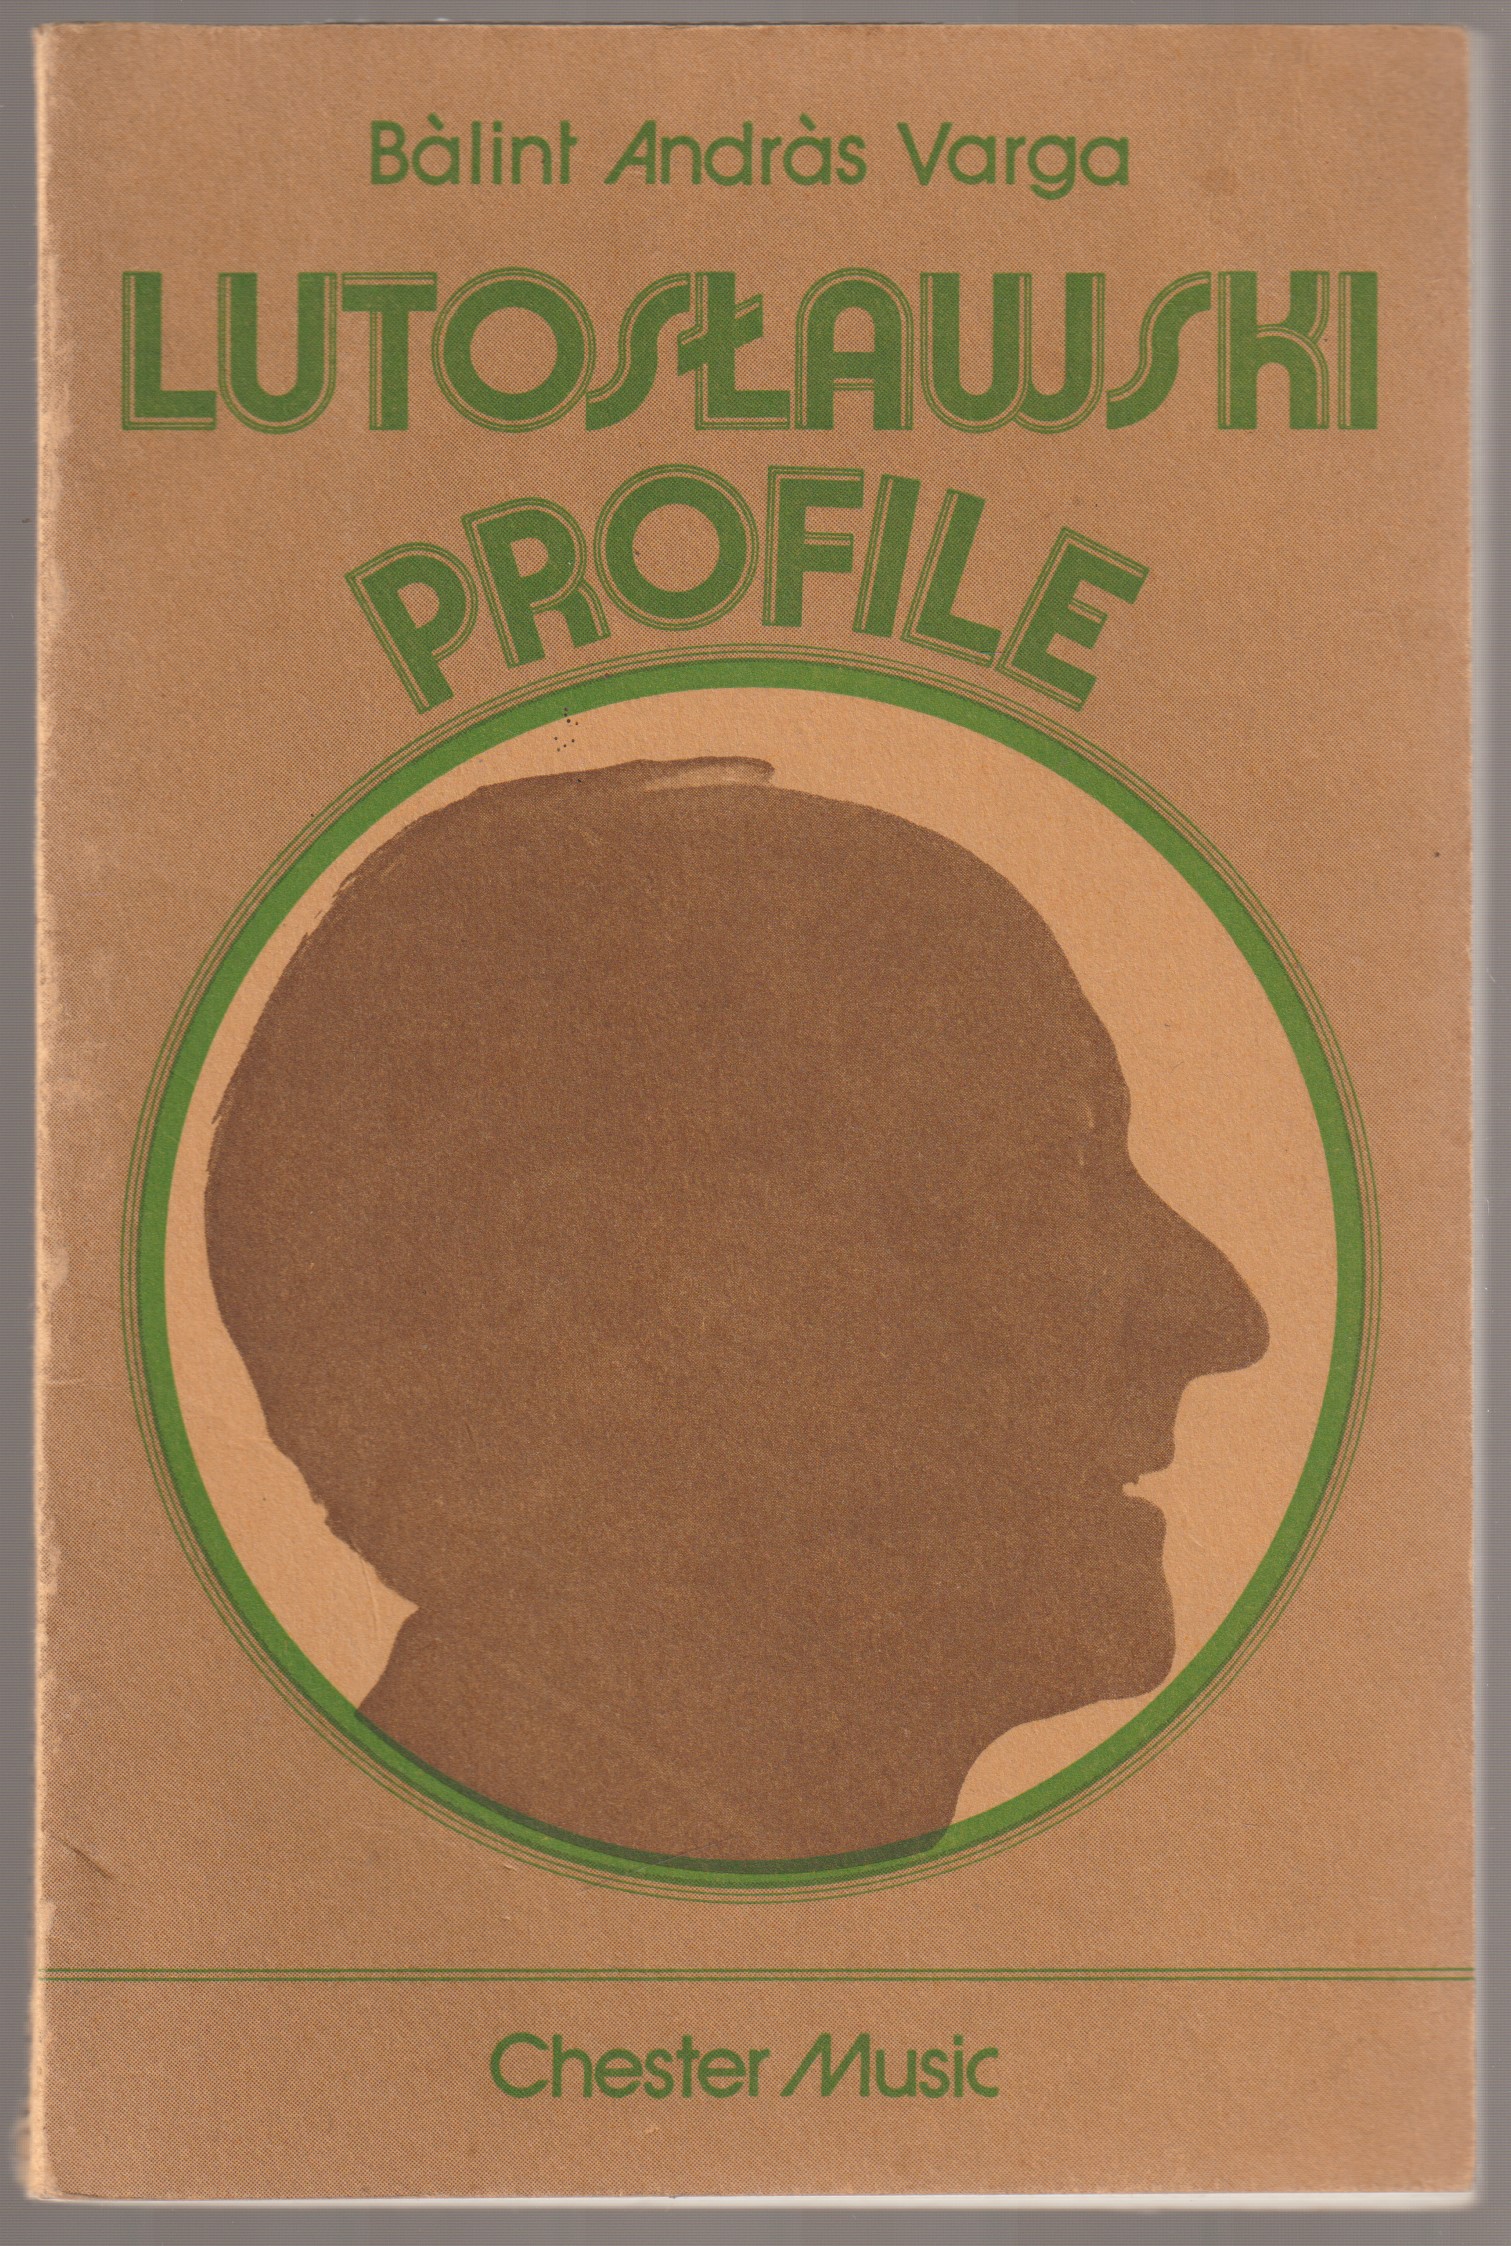 Lutoslawski profile